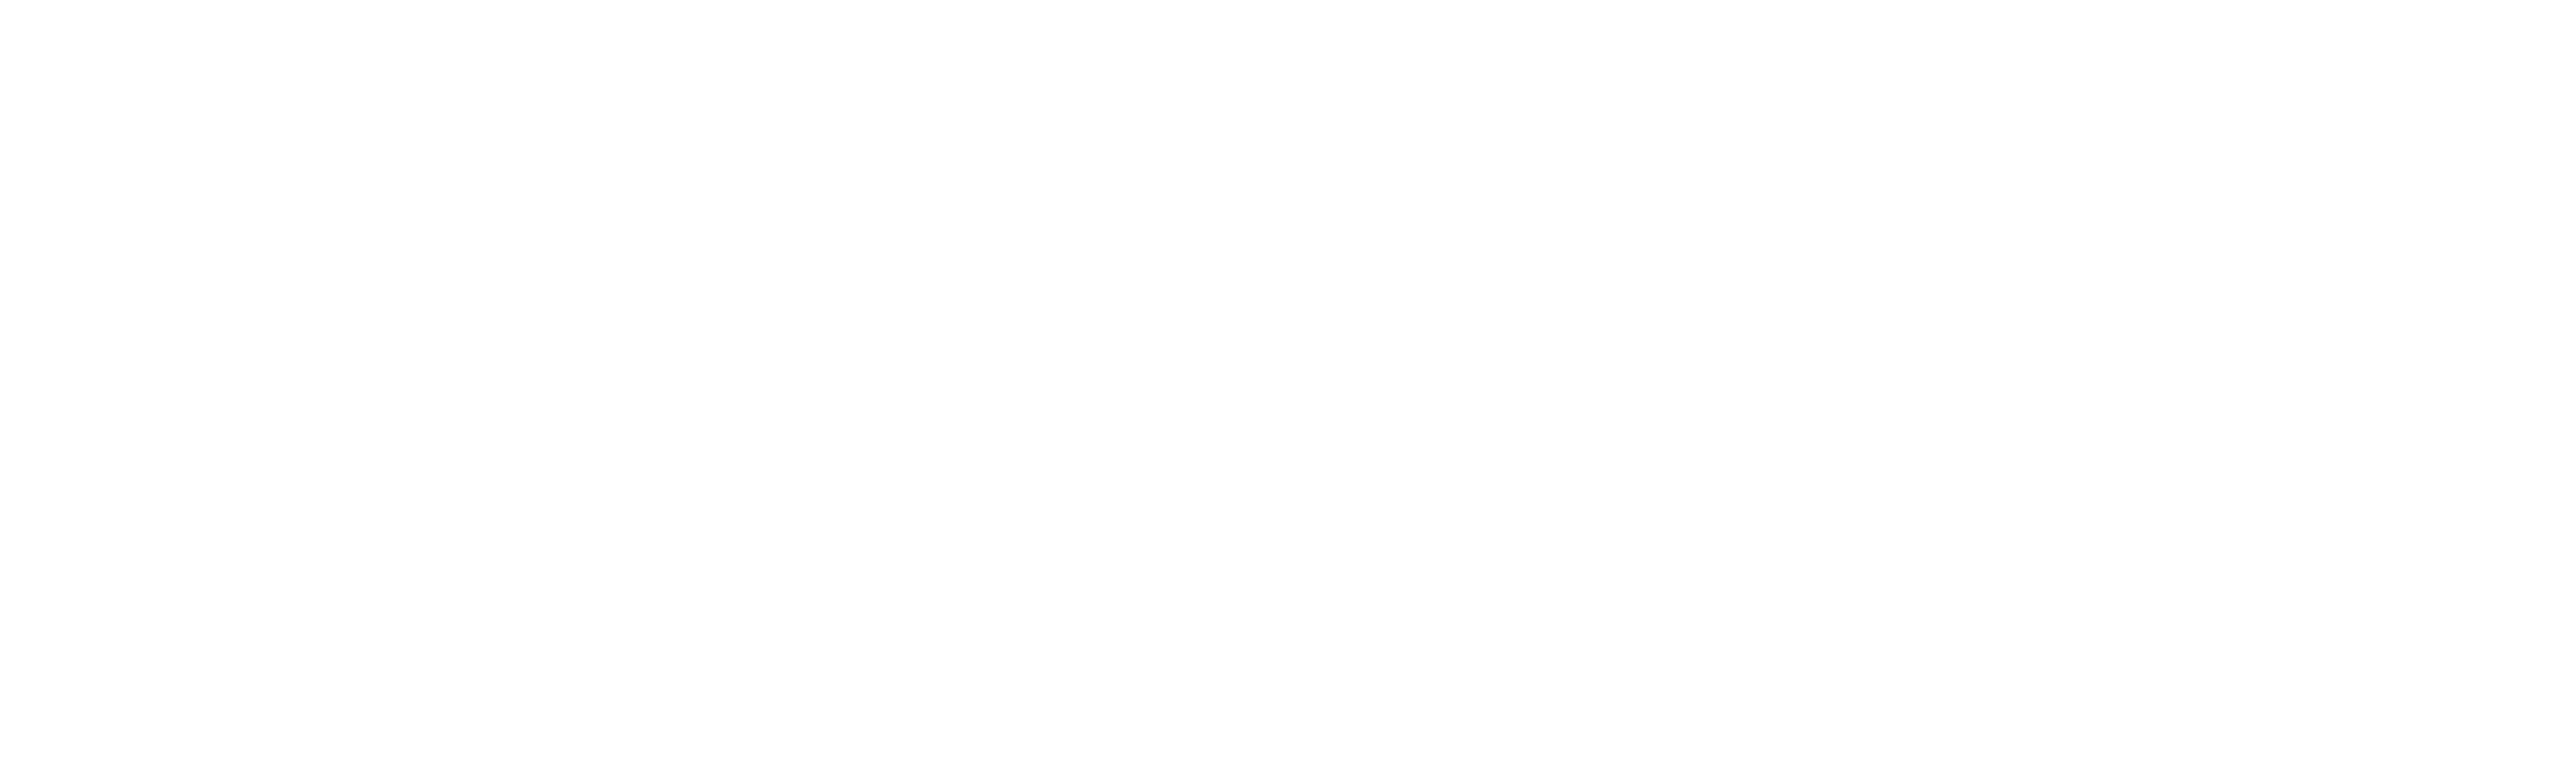 Veeancom Logo